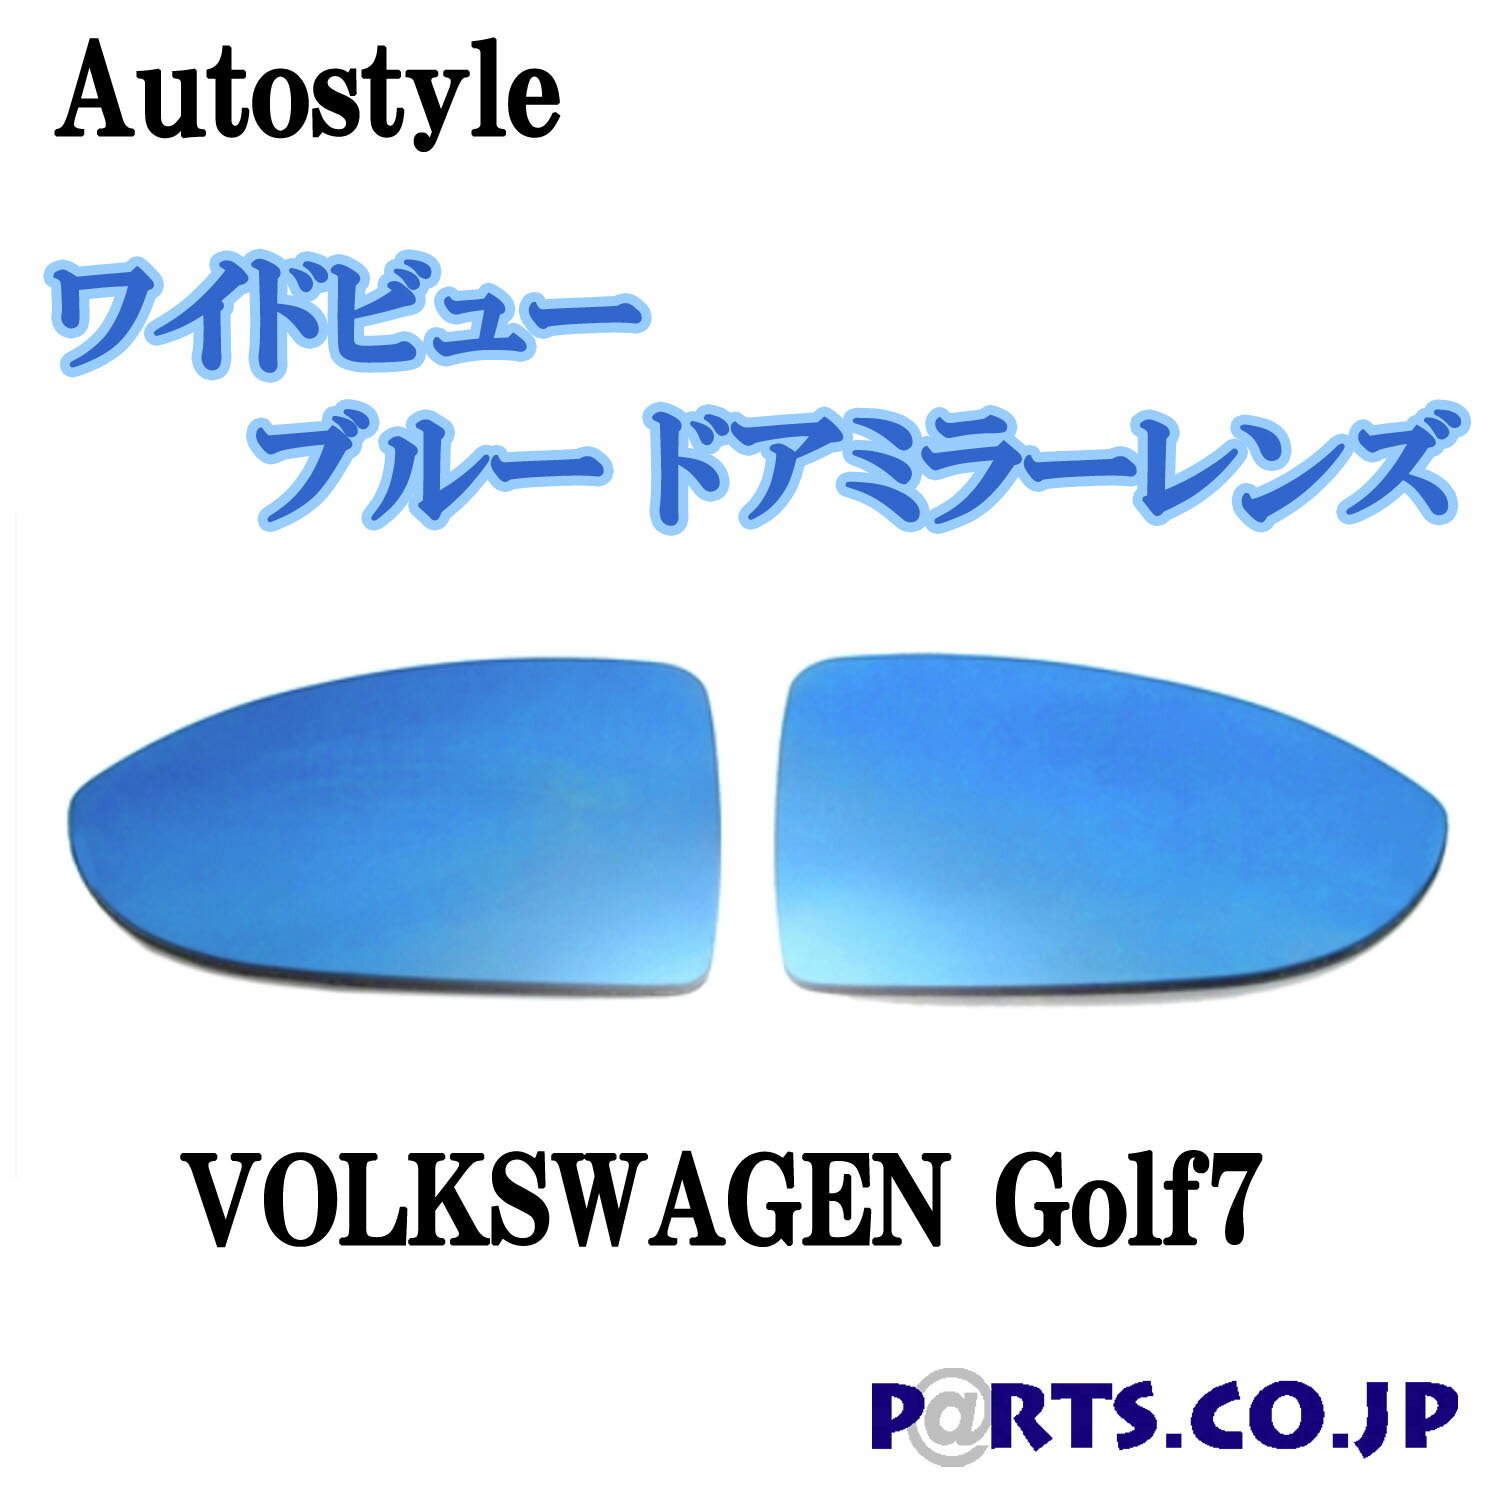 Autostyle ワイドビュー ブルー ドアミラーレンズ VOLKSWAGEN フォルクスワーゲン VW Golf7/all model※ハッチバック車専用 Golf7 Variant/all model Golf7 R 代引き不可